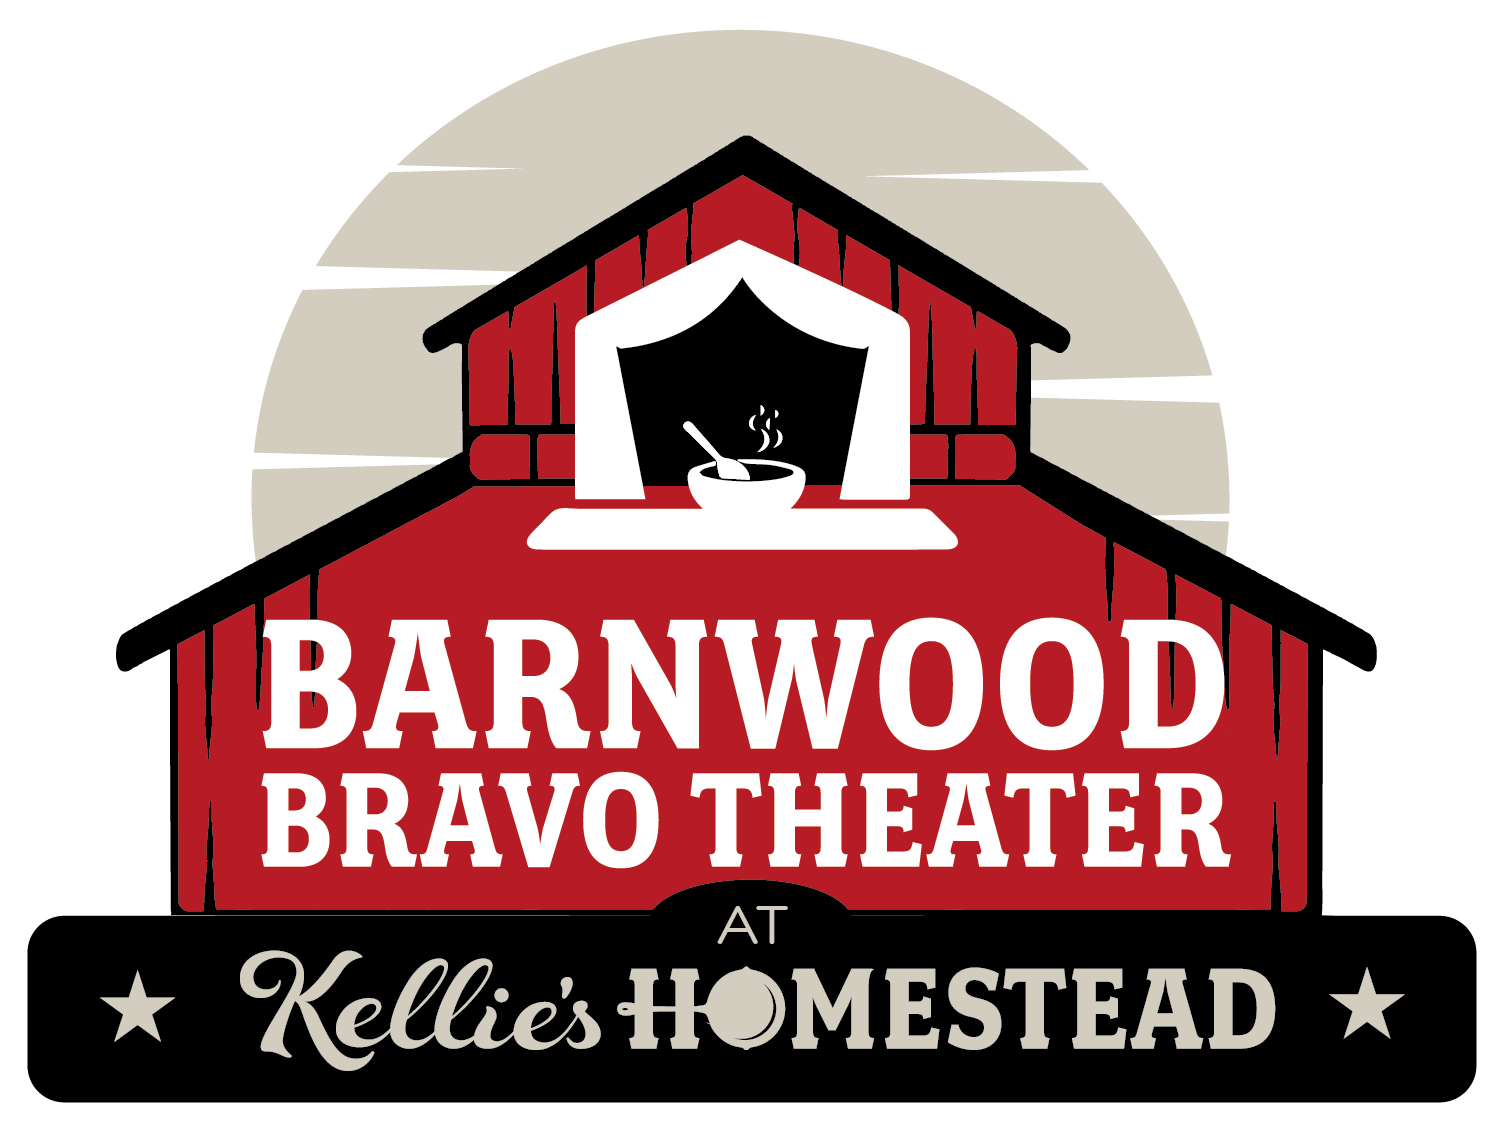 Barnwood Bravo Theater